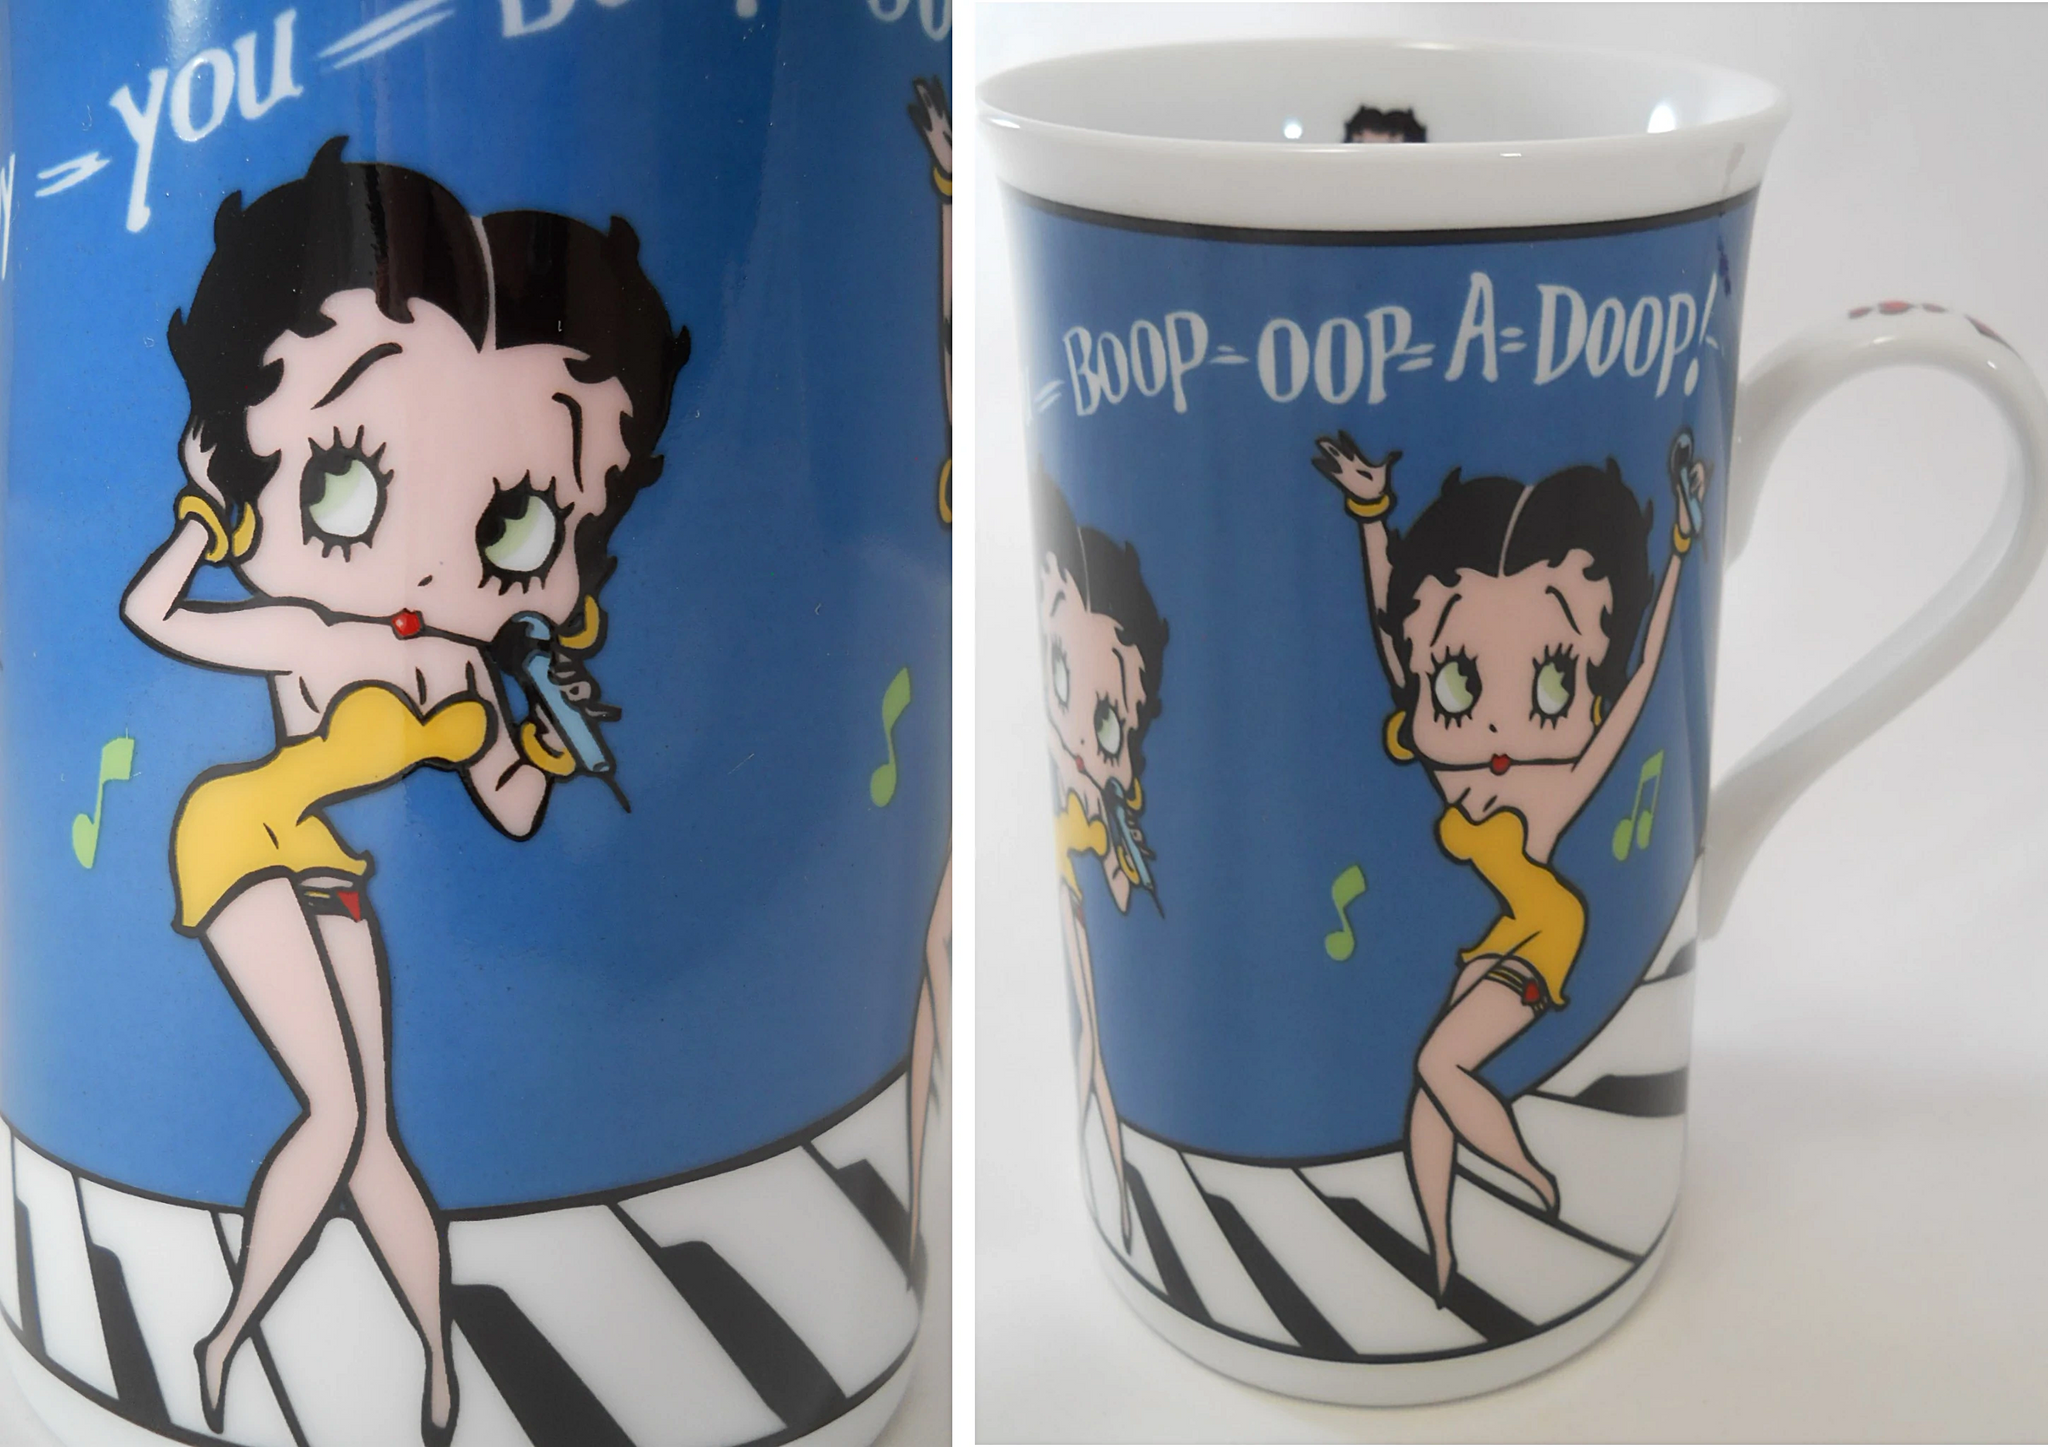 Betty Boop “The Original” 11oz. Mug - Fashion Corner LA